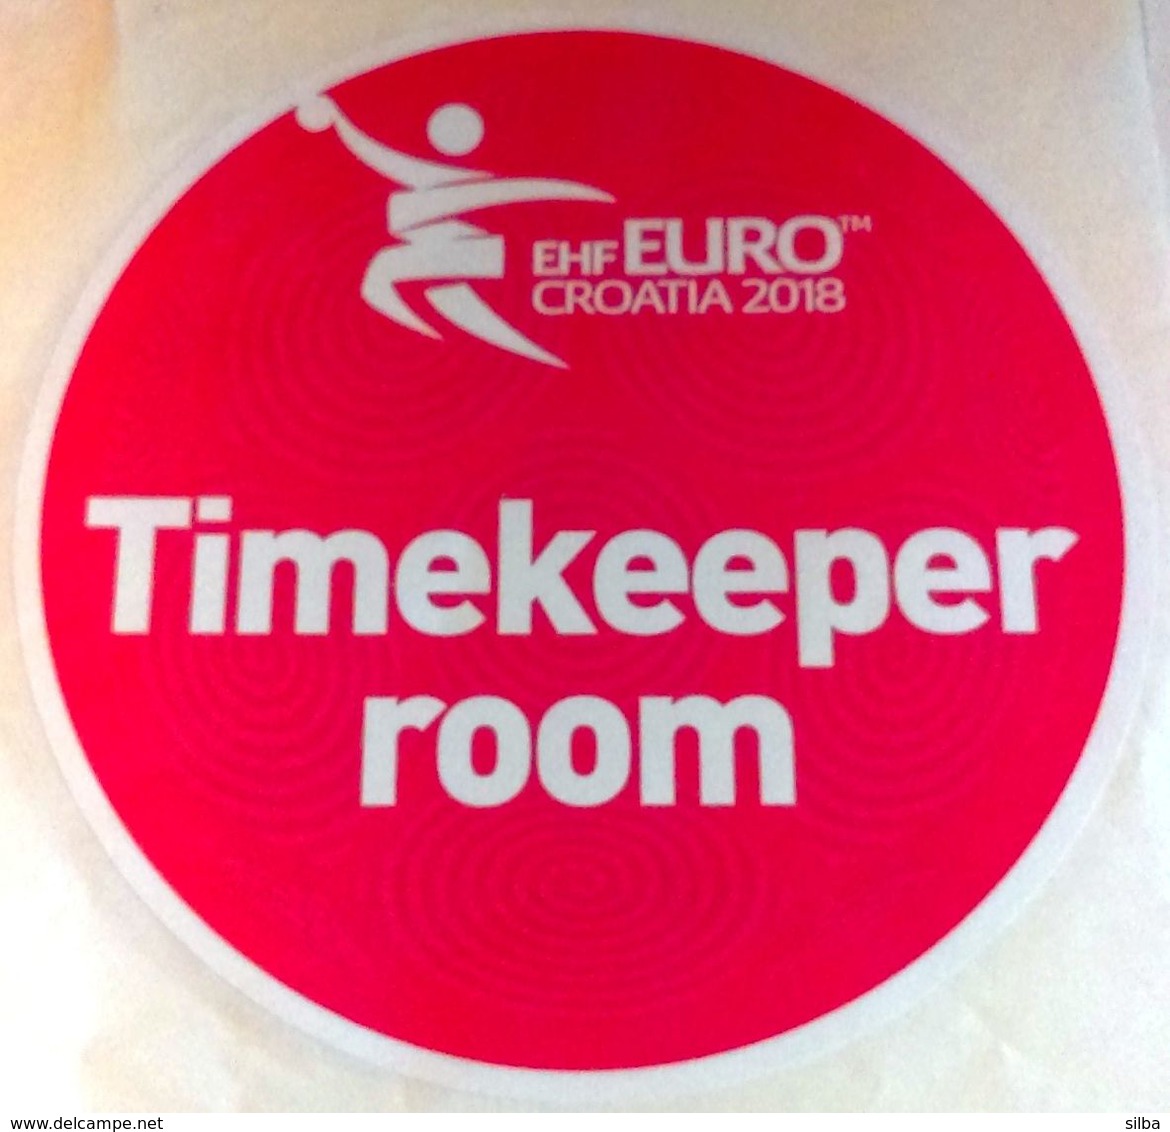 HANDBALL / MEN'S EHF EURO CROATIA 2018 / Main Official Sticker / TIMEKEEPER ROOM - Handball